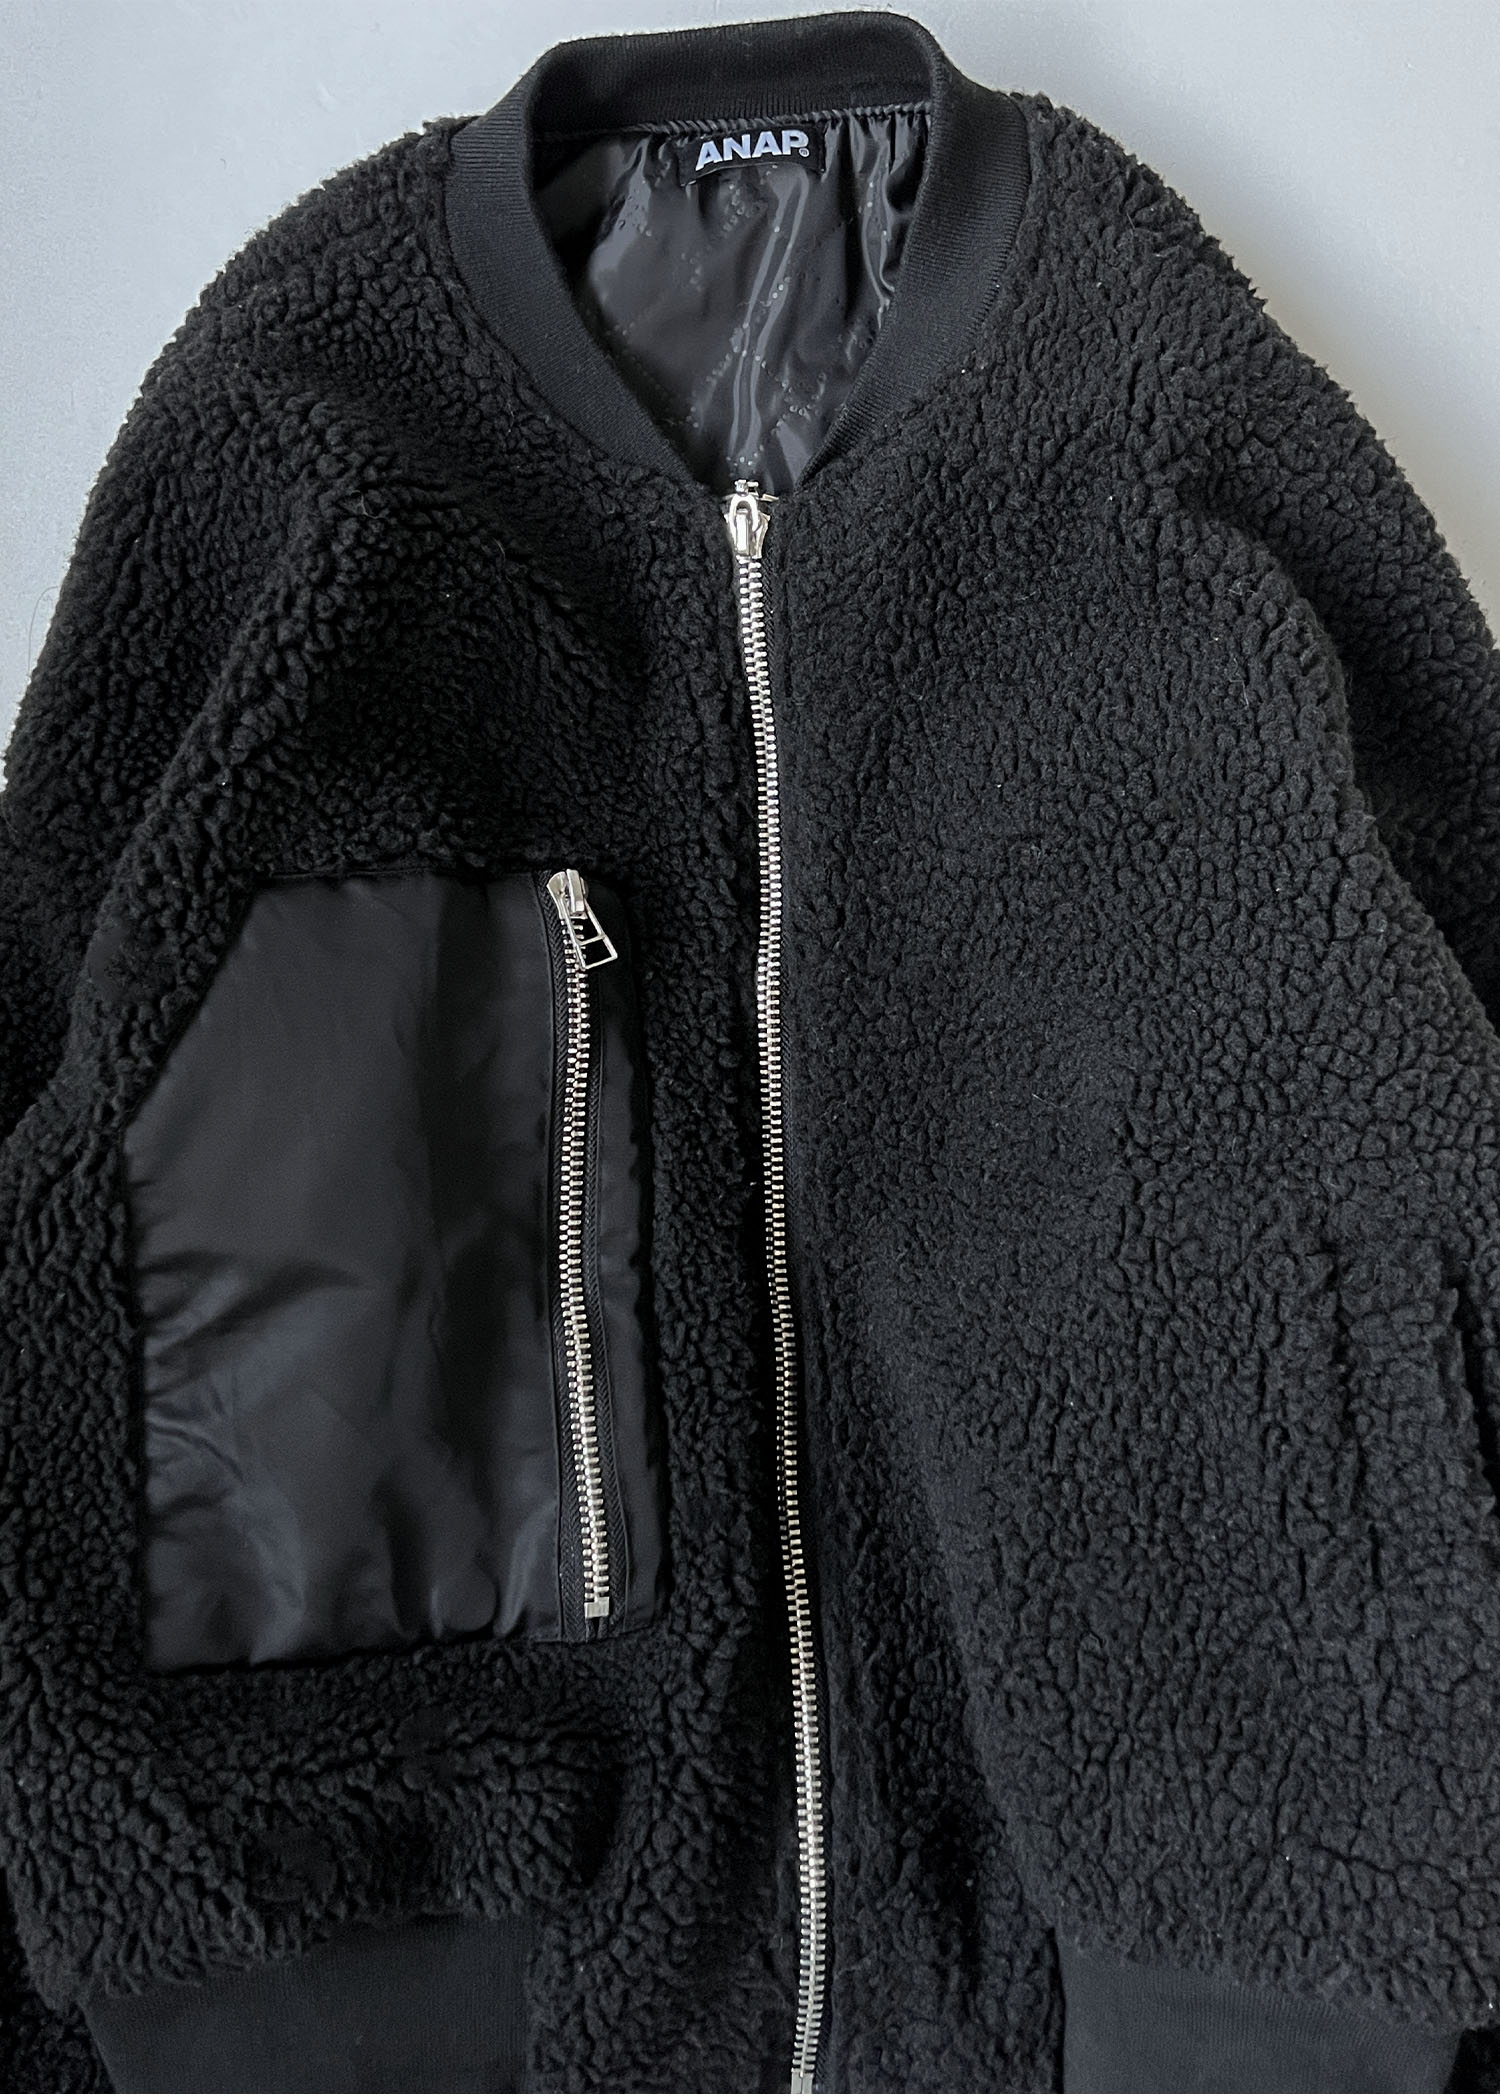 ANAP overfit fleece jacket